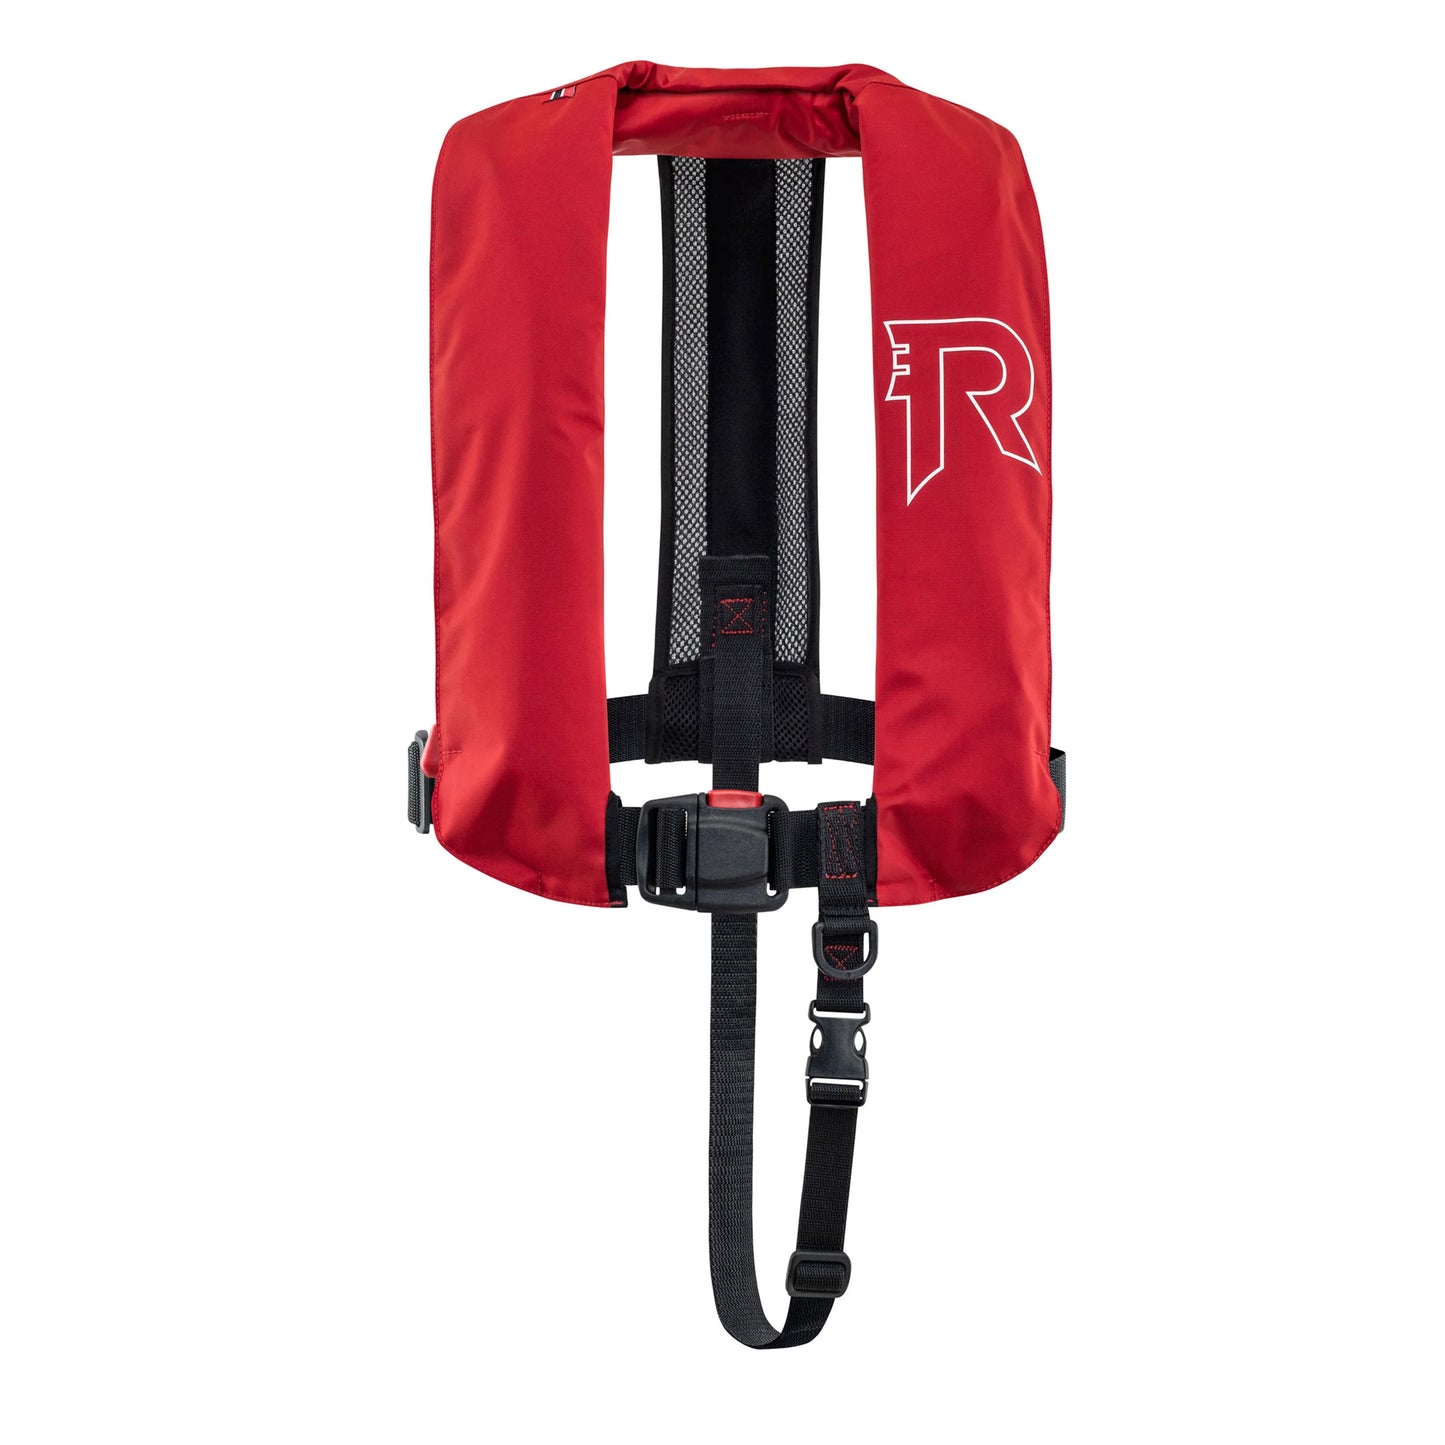 Regatta AquaSafe Elite 170N inflatable life jacket 40 kg+